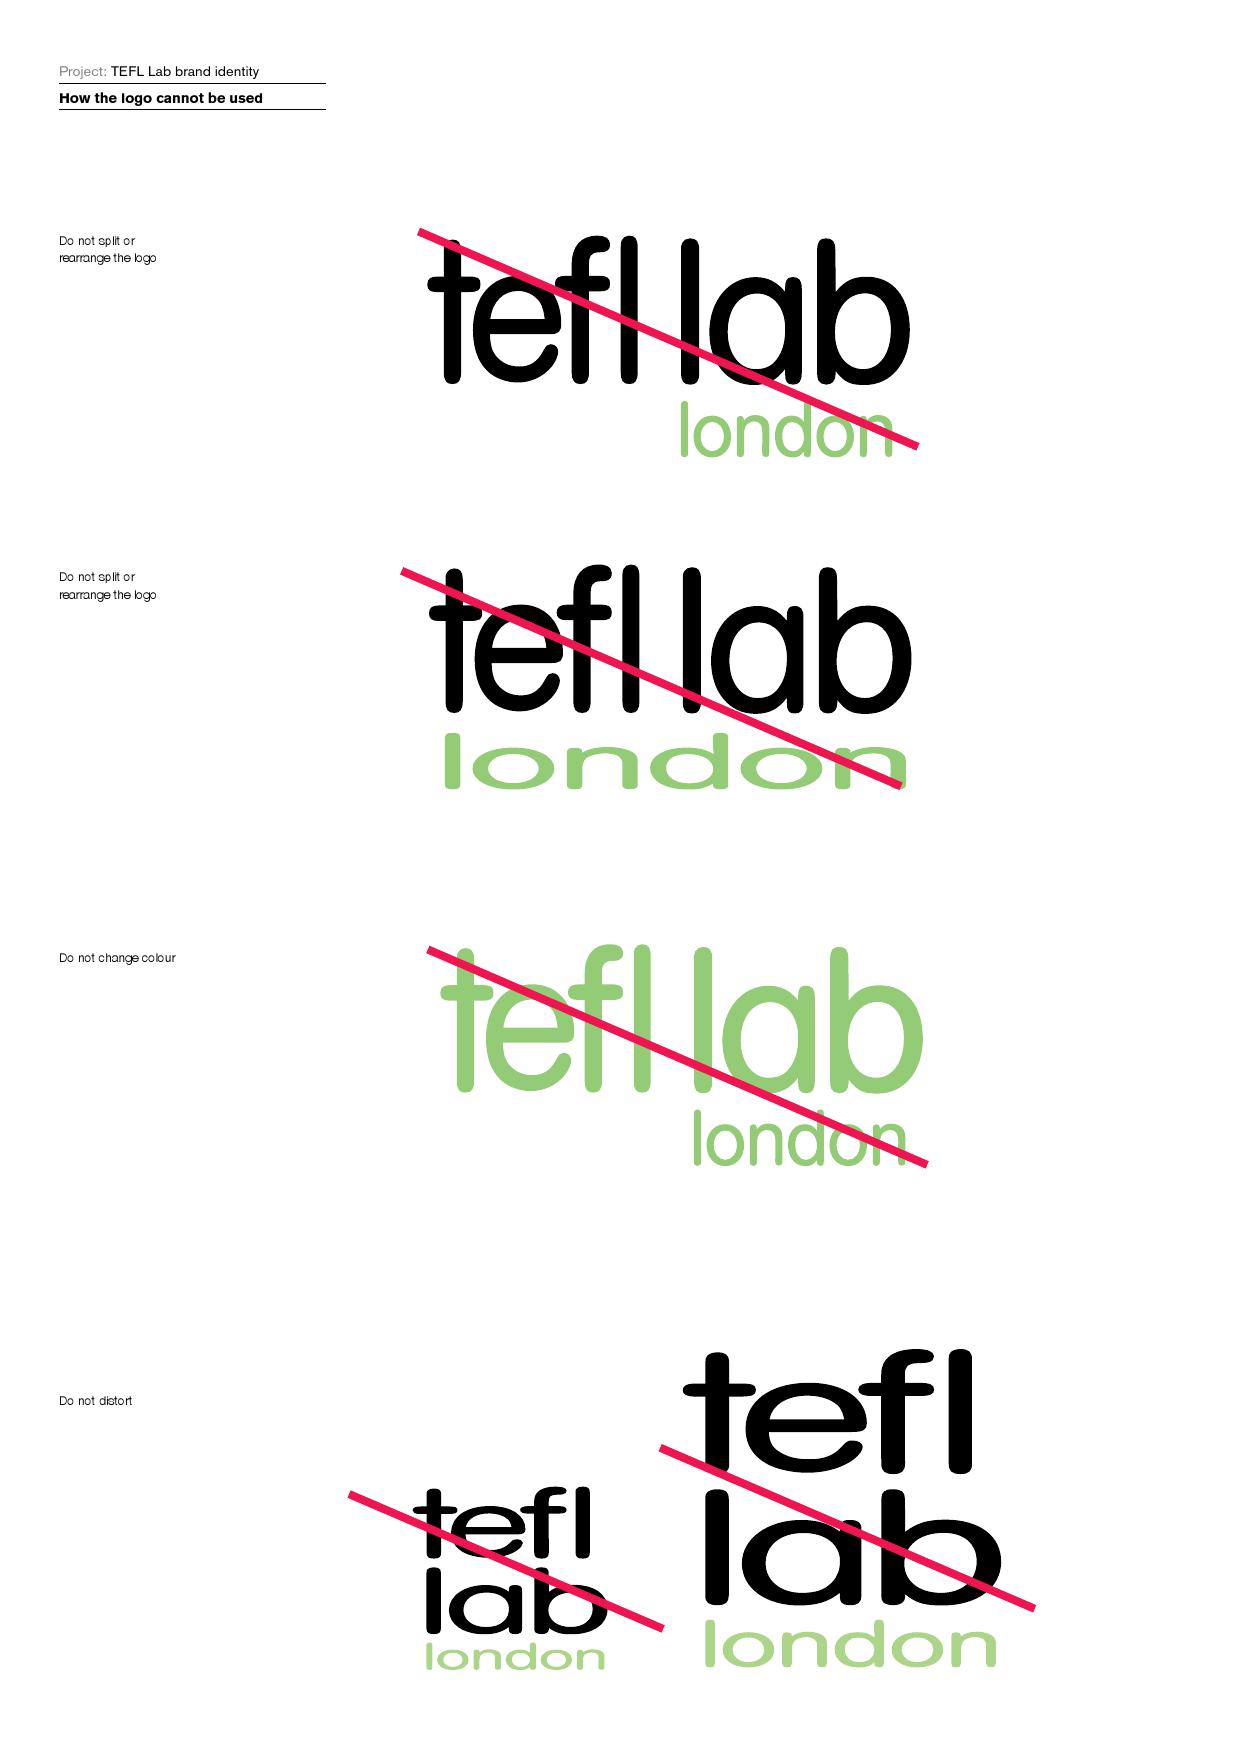 Tefl_lab_brand identity_000002.jpg